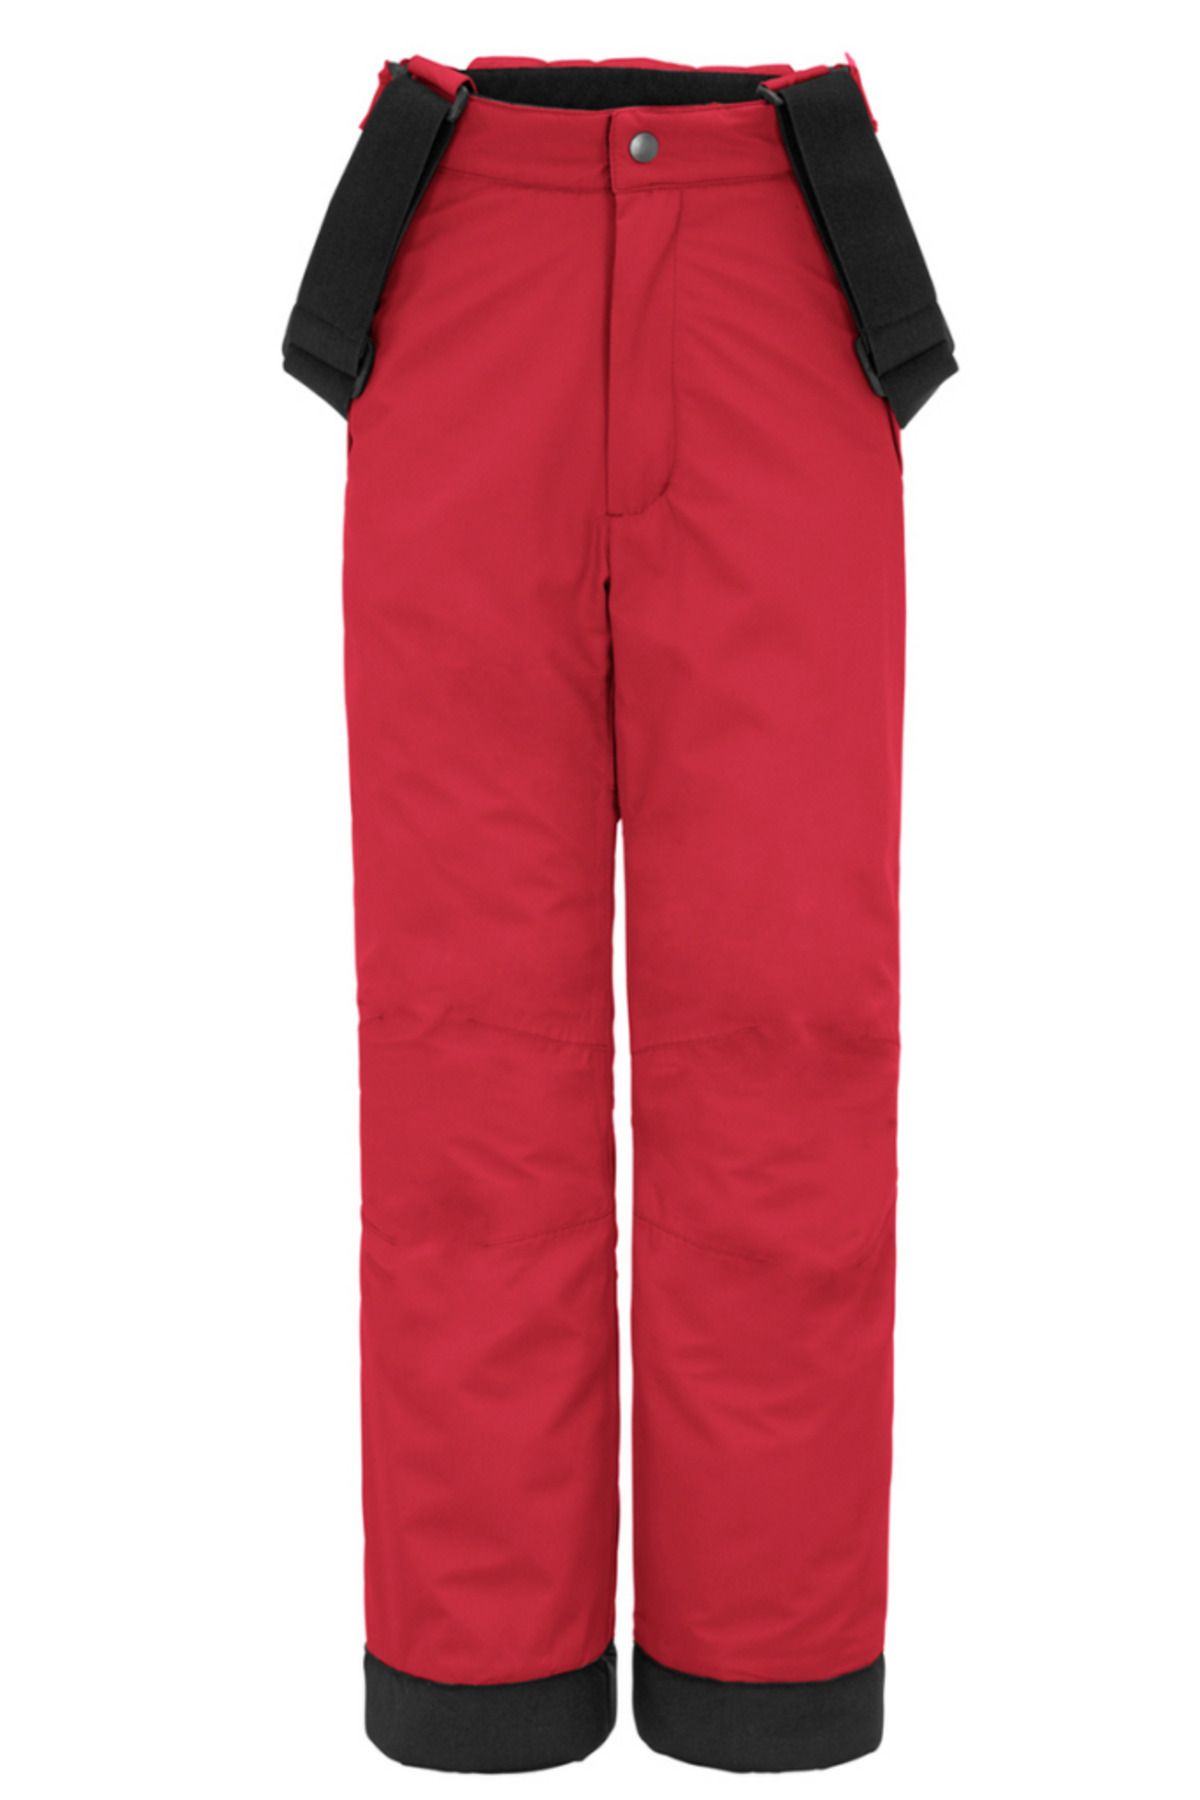 Maier Maxi Çocuk Kayak Pantolonu Kırmızı-ma300002-17m04